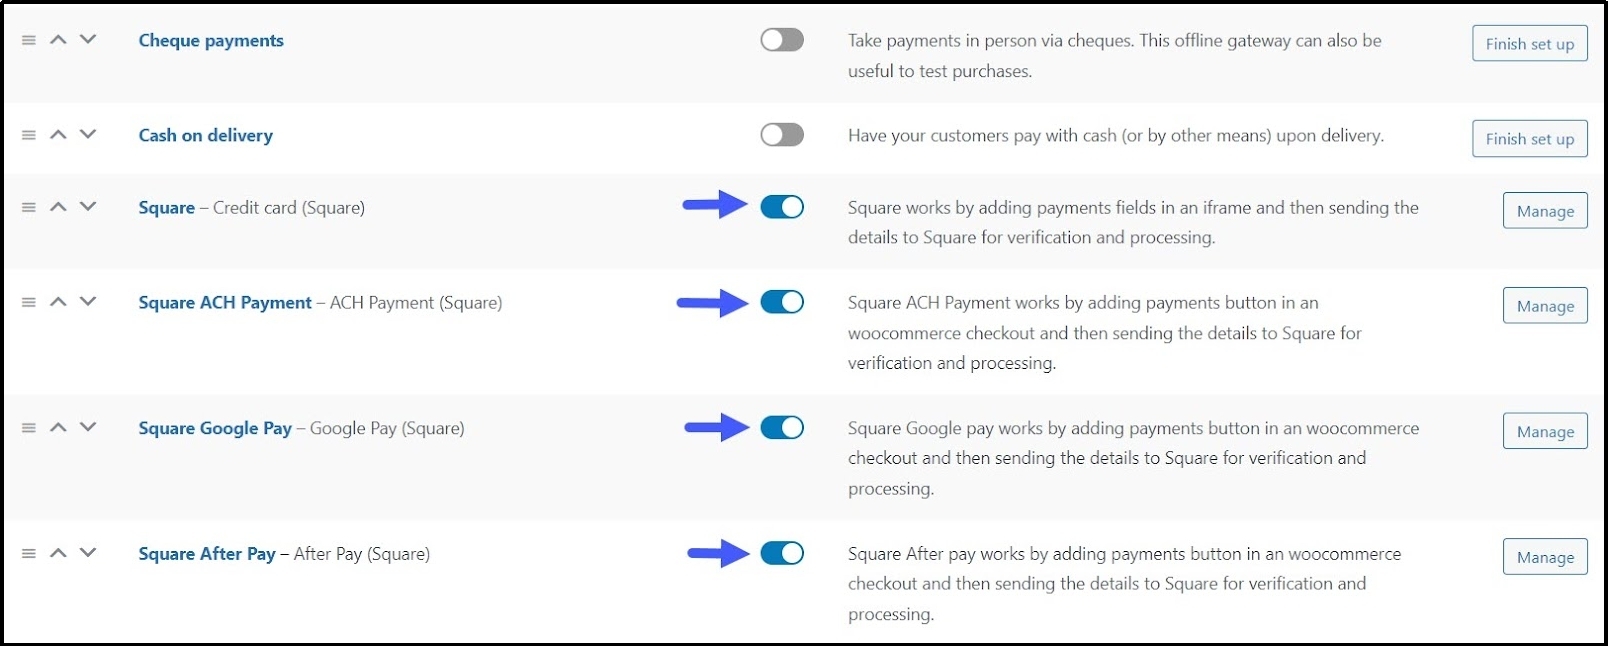 respective payment option